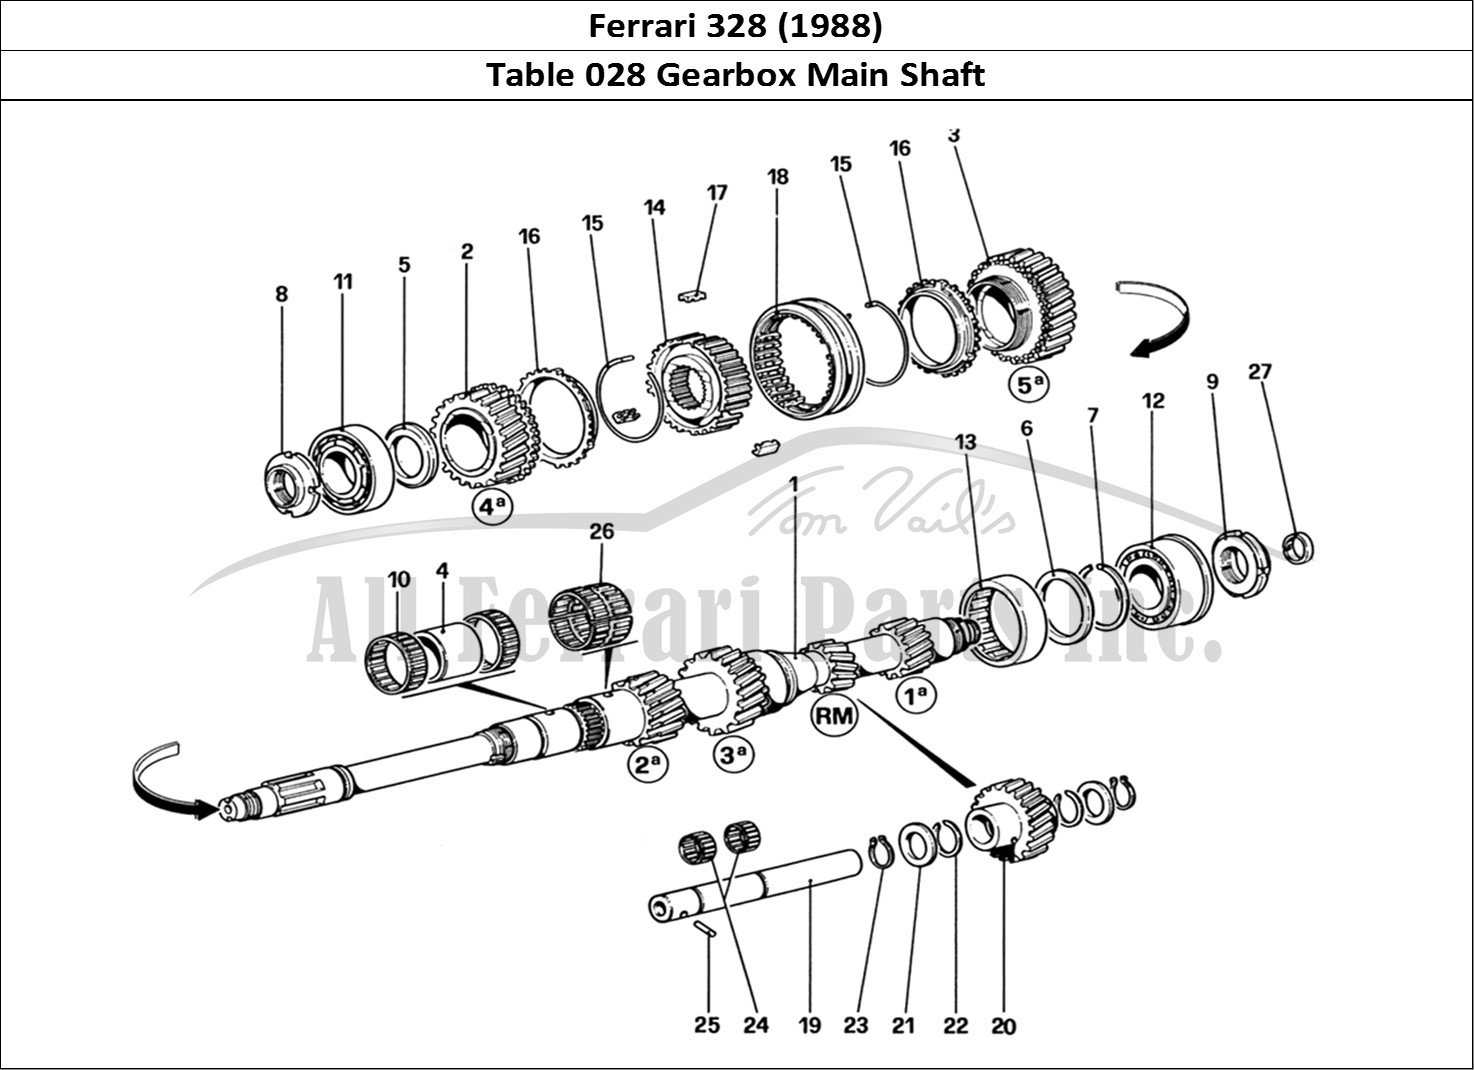 Ferrari Parts Ferrari 328 (1988) Page 028 Main Shaft Gears